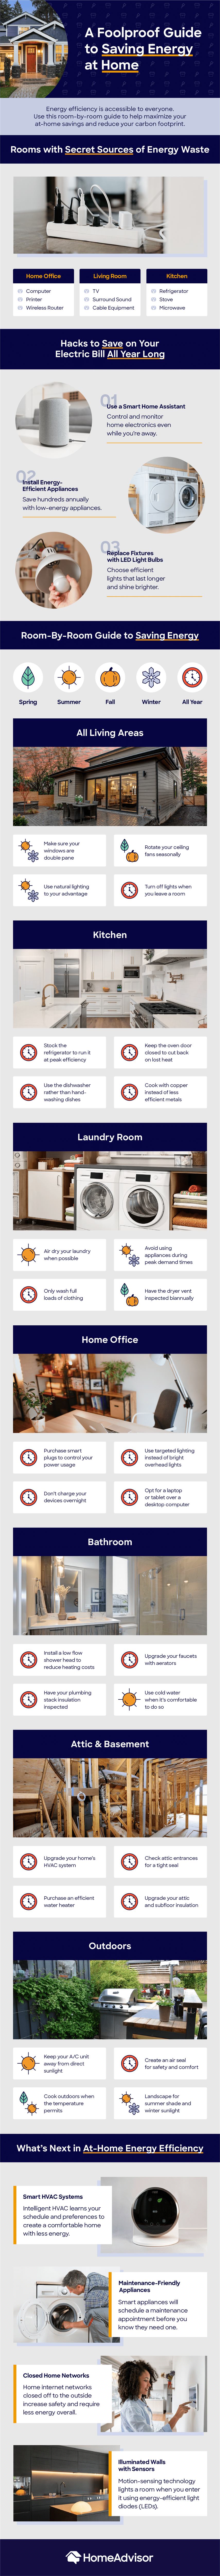 Saving energy at home infographic